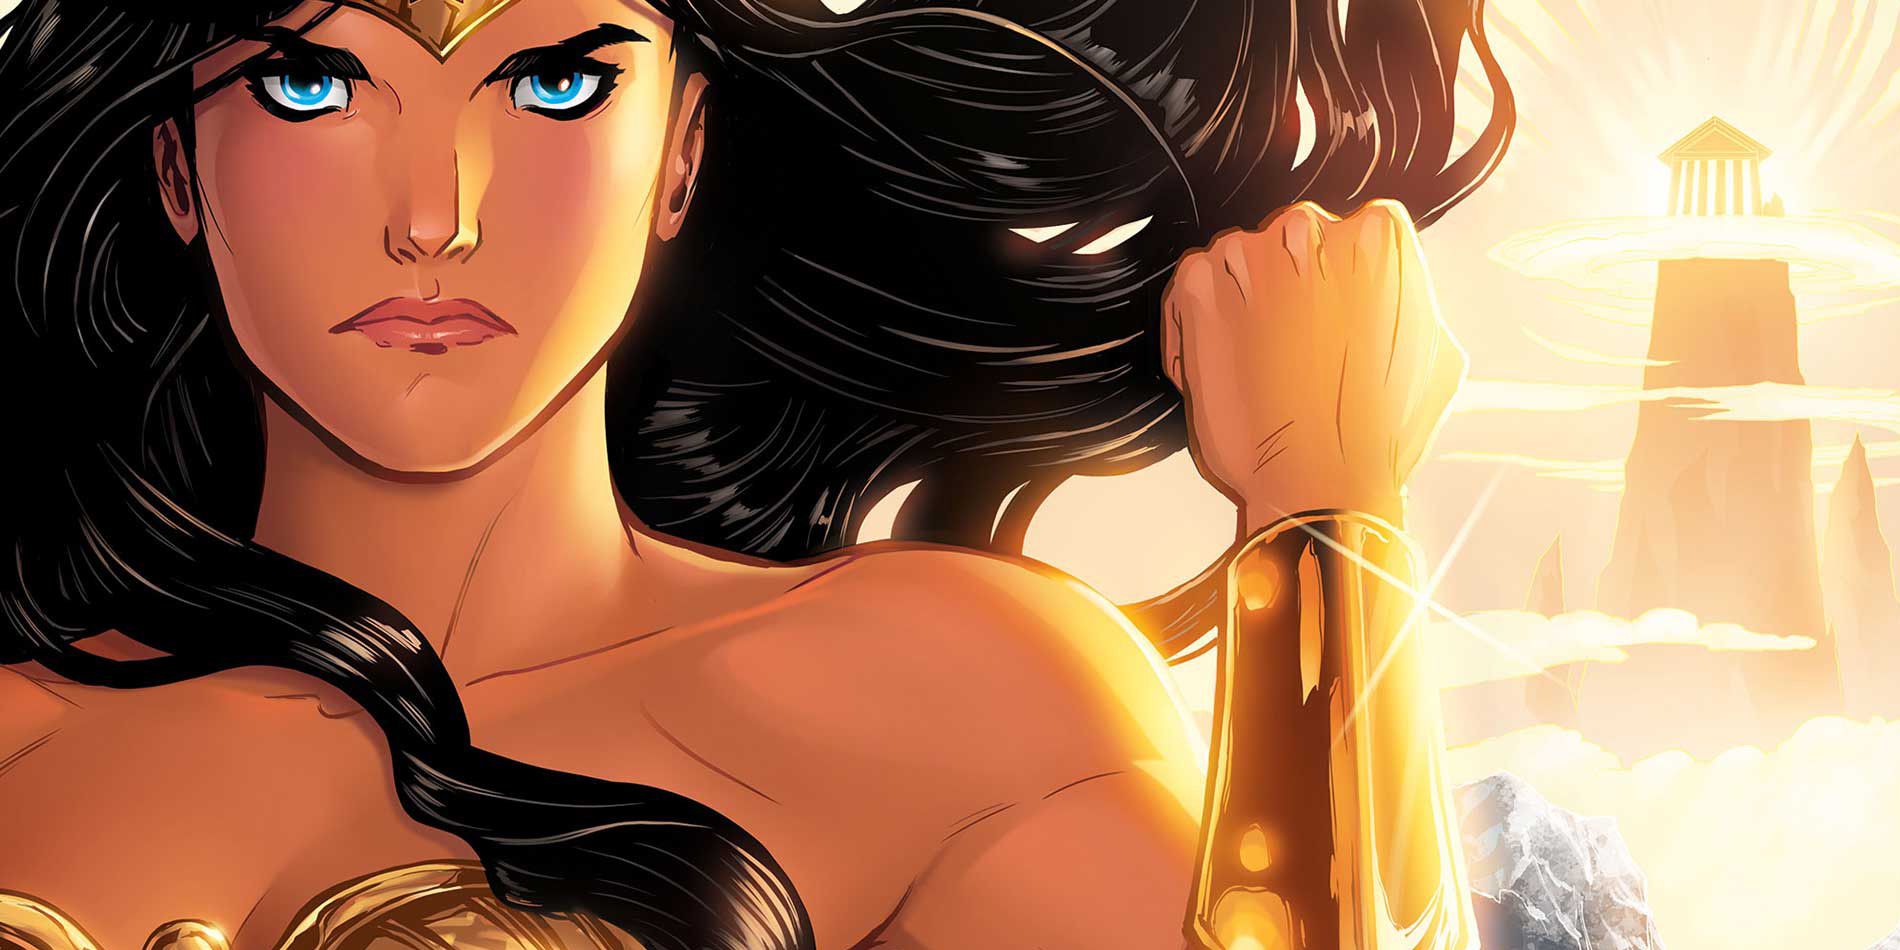 Wonder Woman clenching and raising a fist